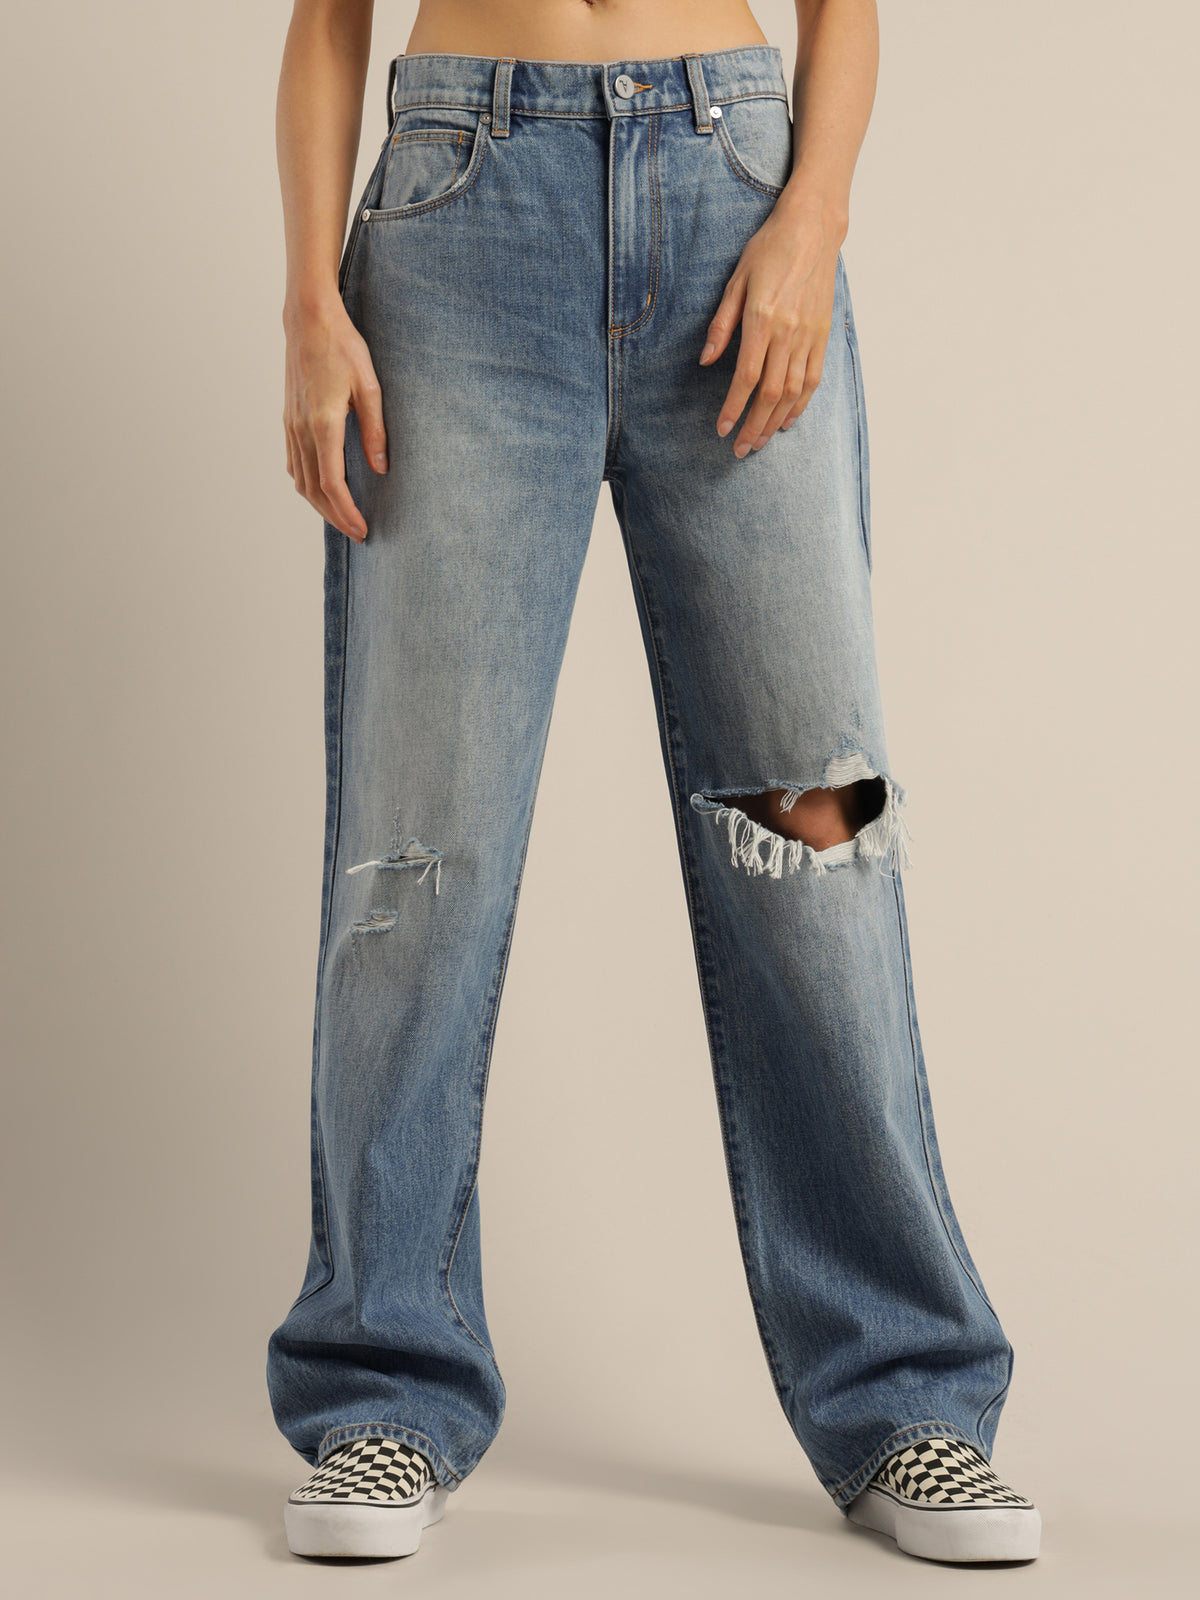 A Slouch Jeans in Ariel Blue